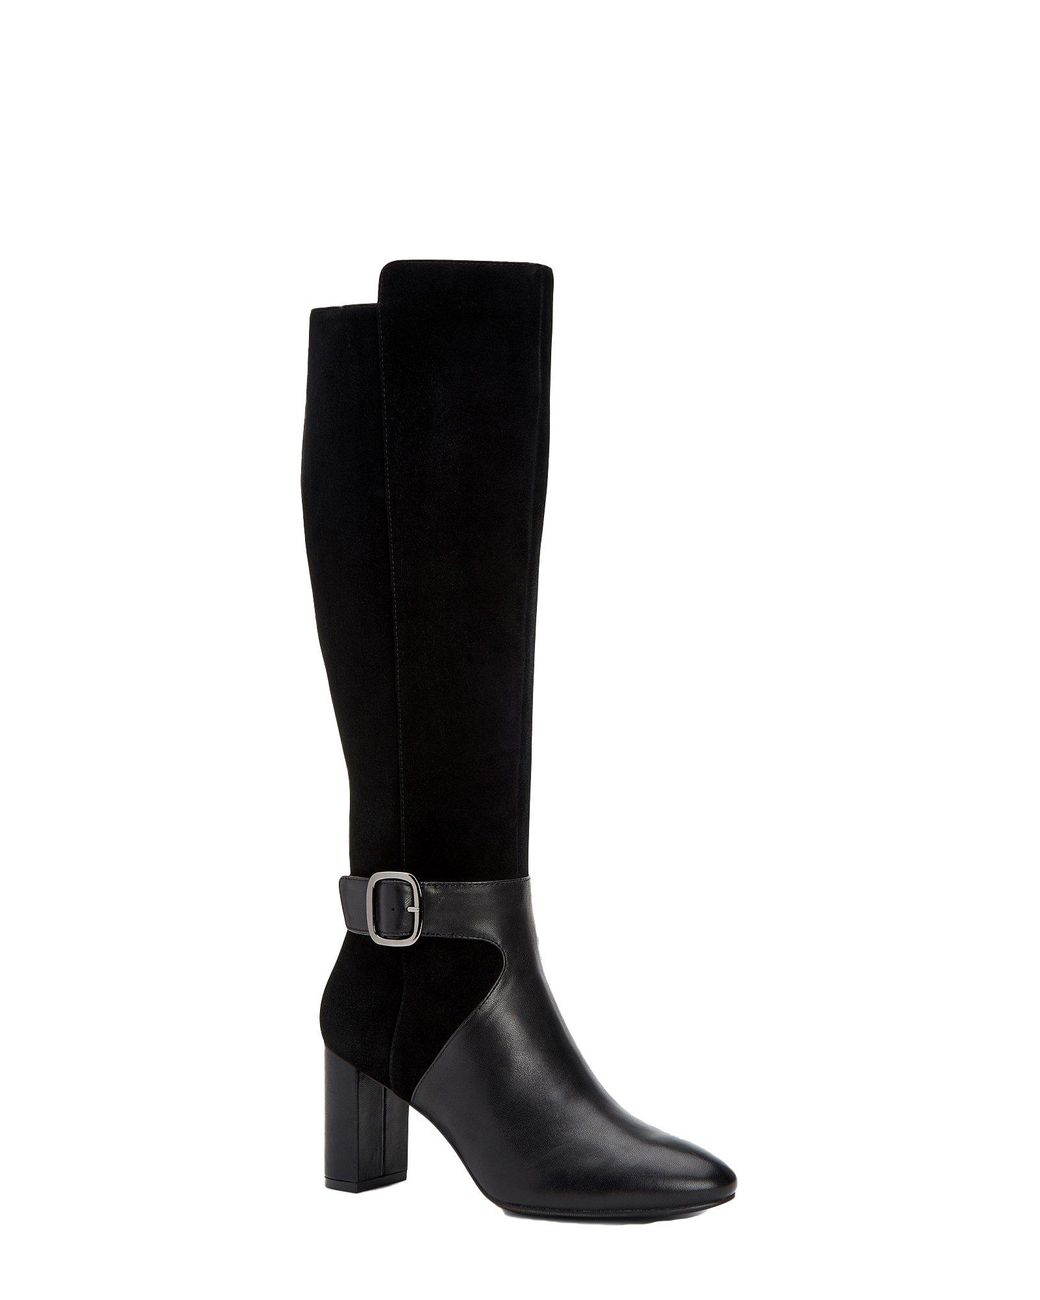 wide calf black dress boots